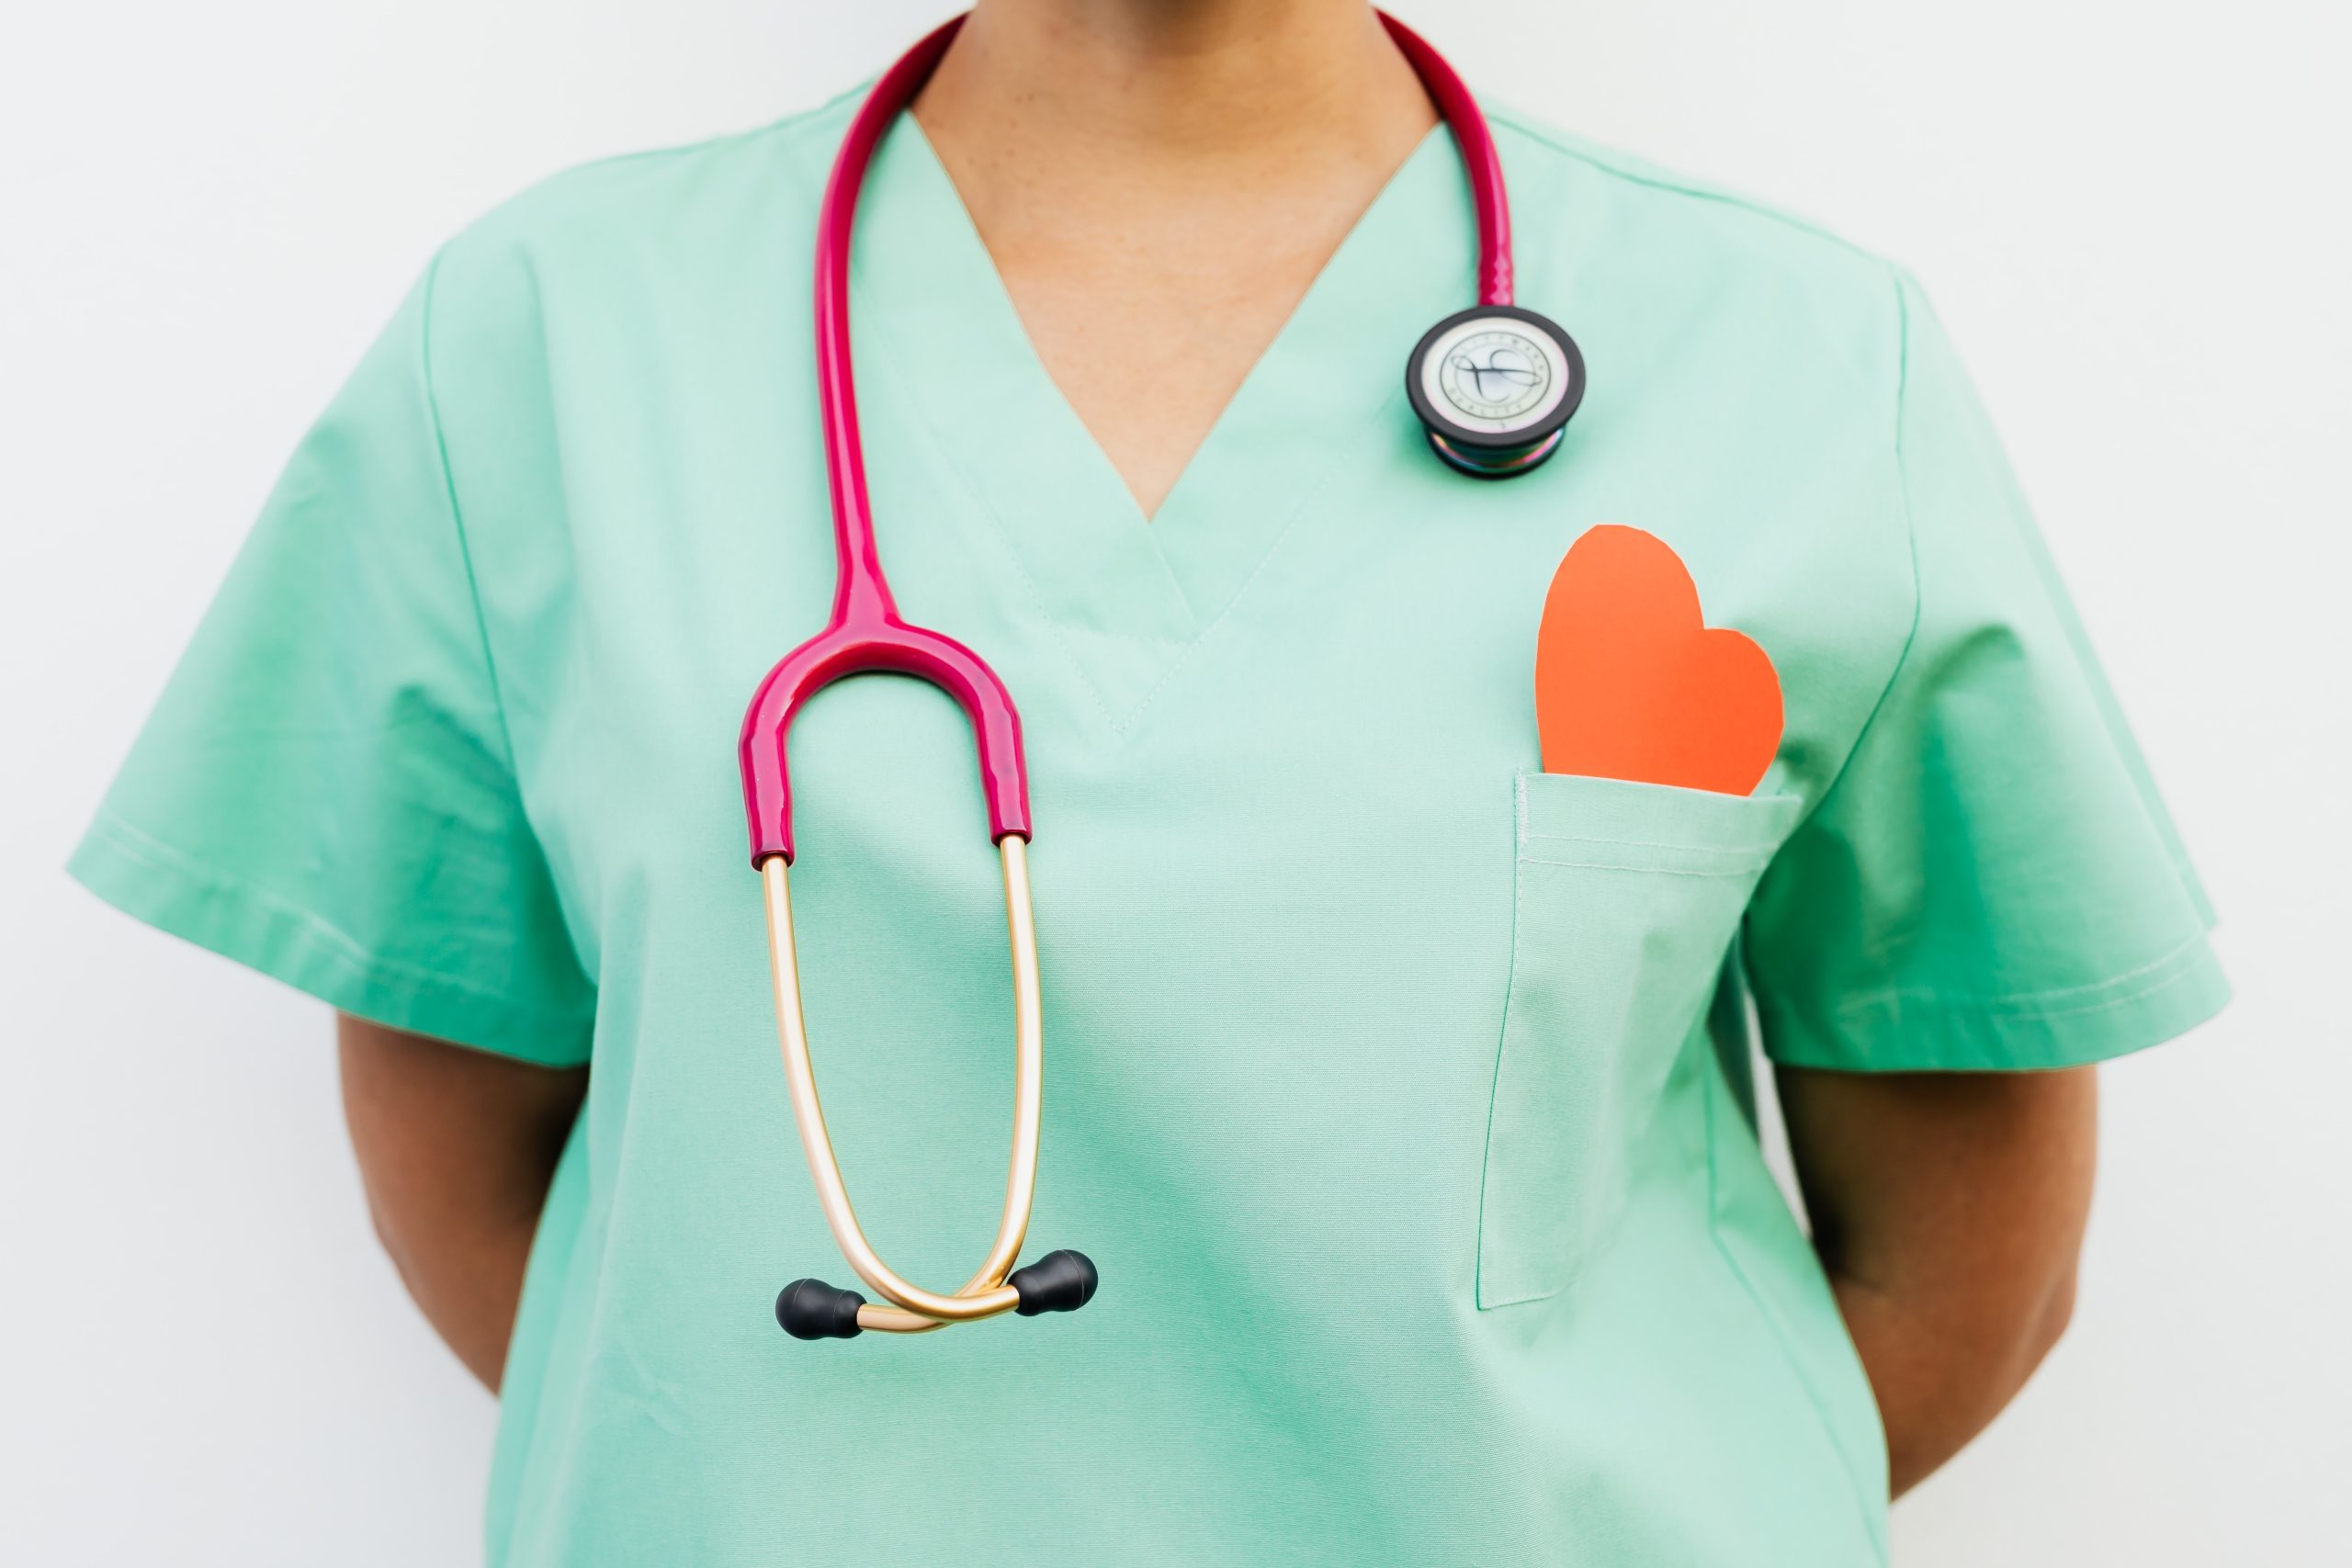 Professioni sanitarie-medico-cuore